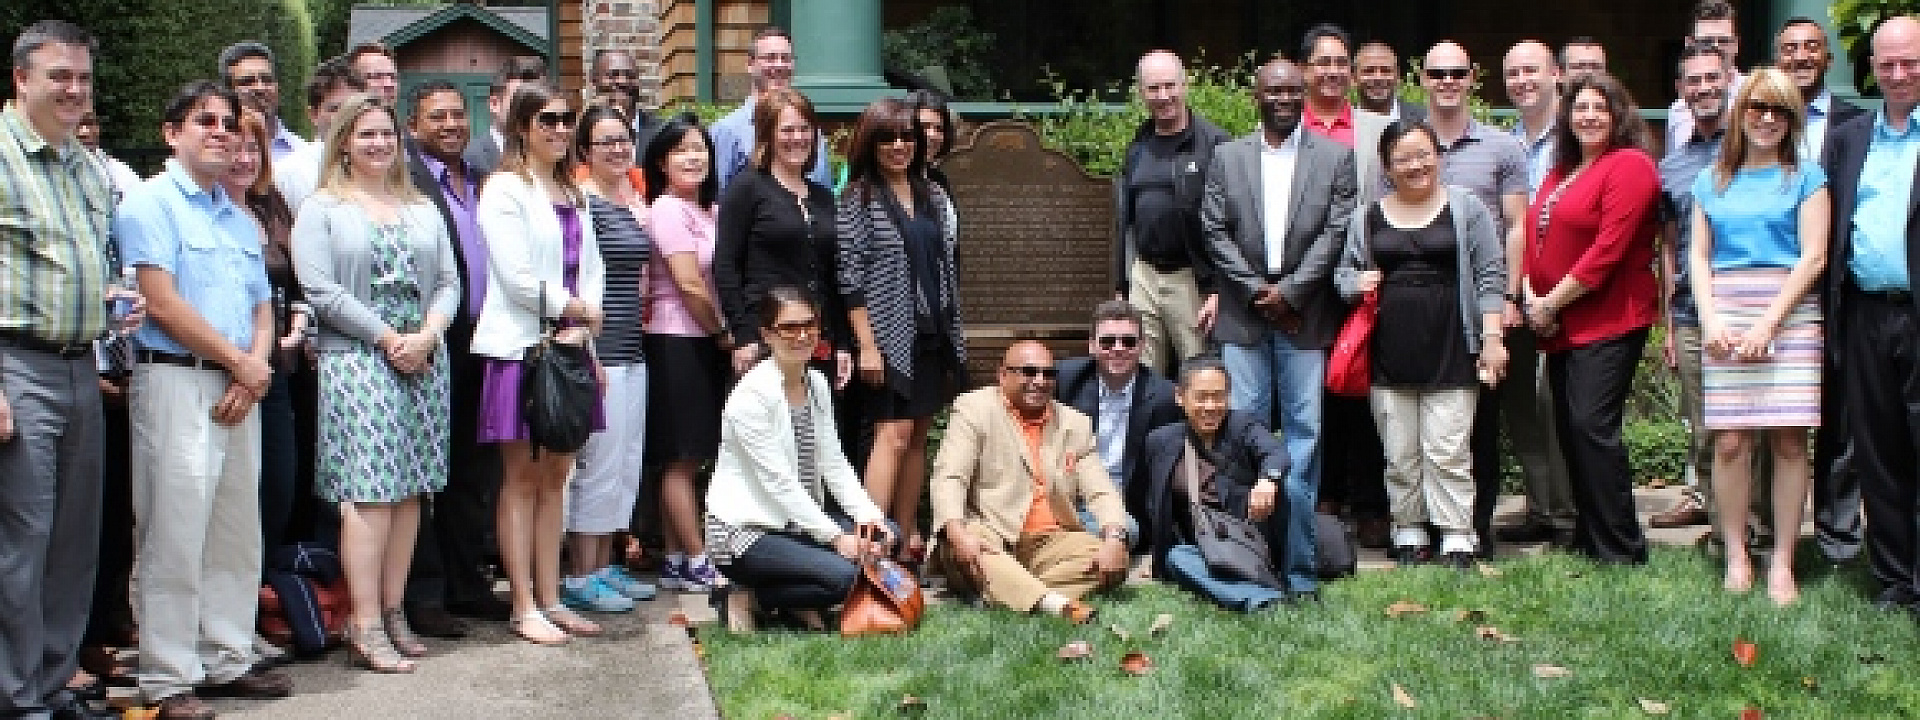 The 2014 Executive MBA cohort